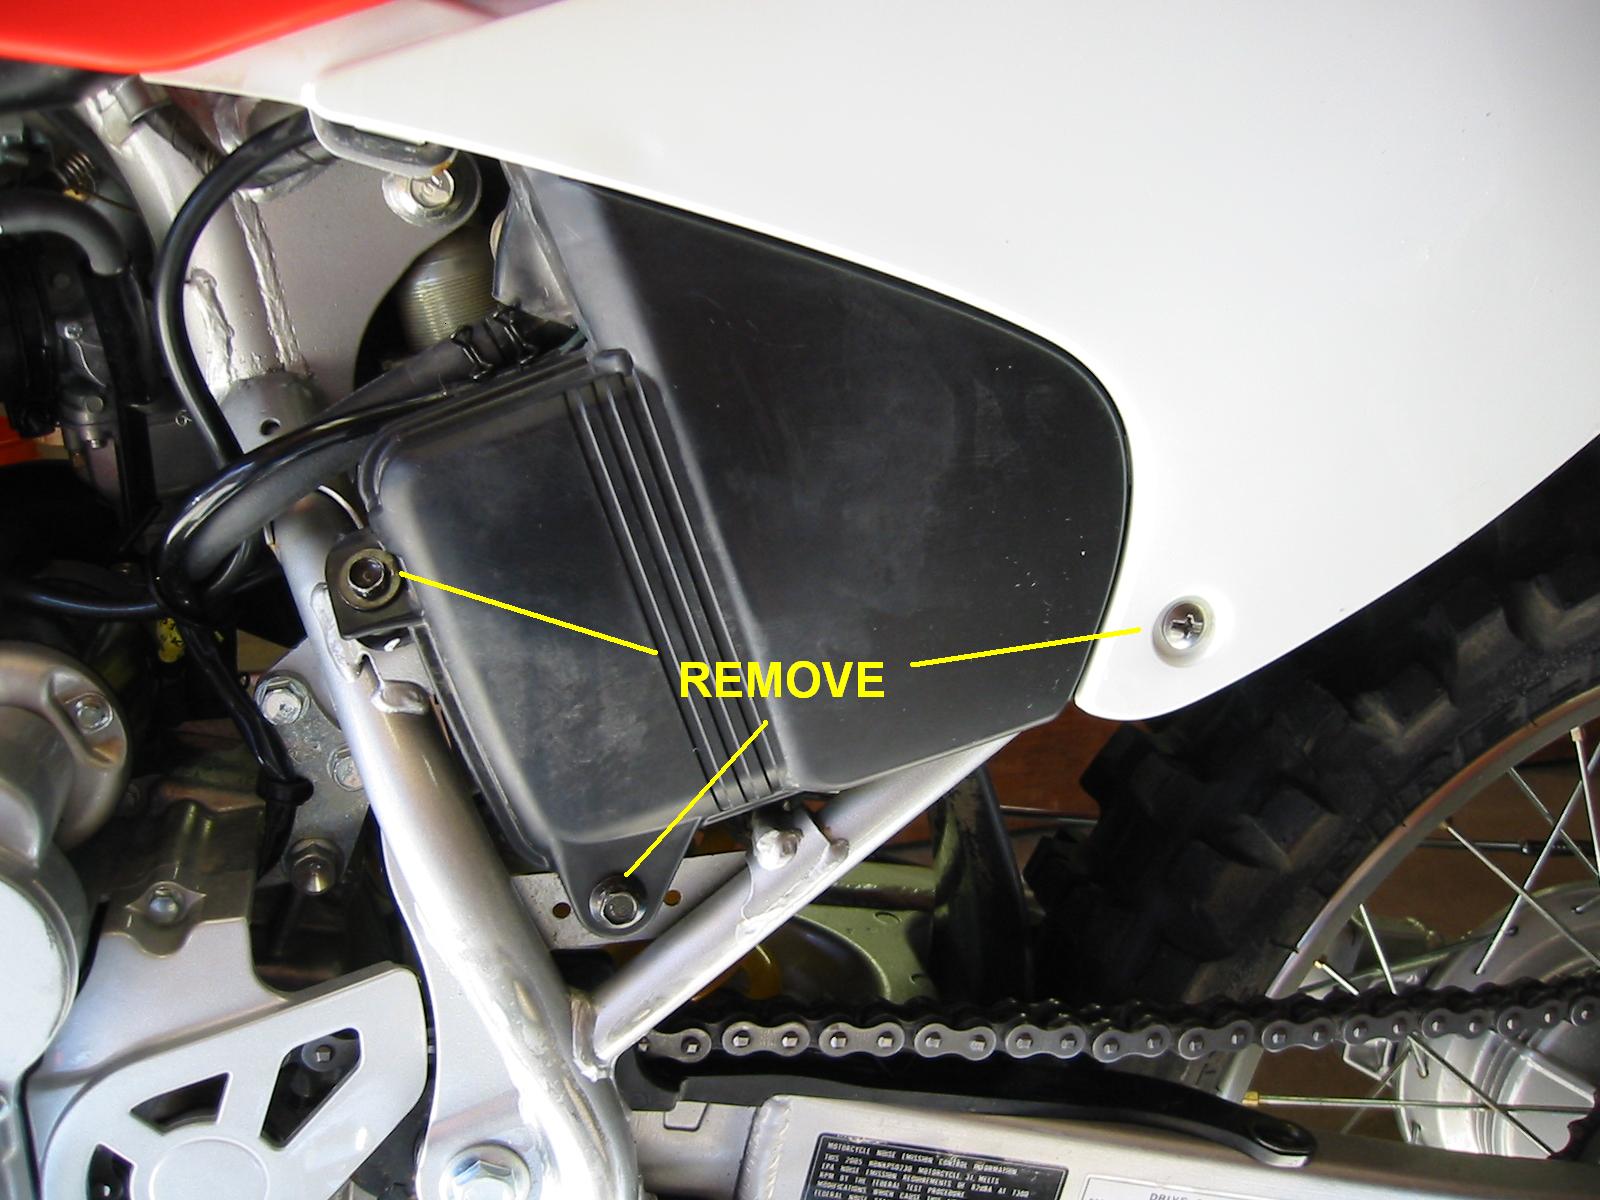 Honda CRF230 valve clearance adjustment